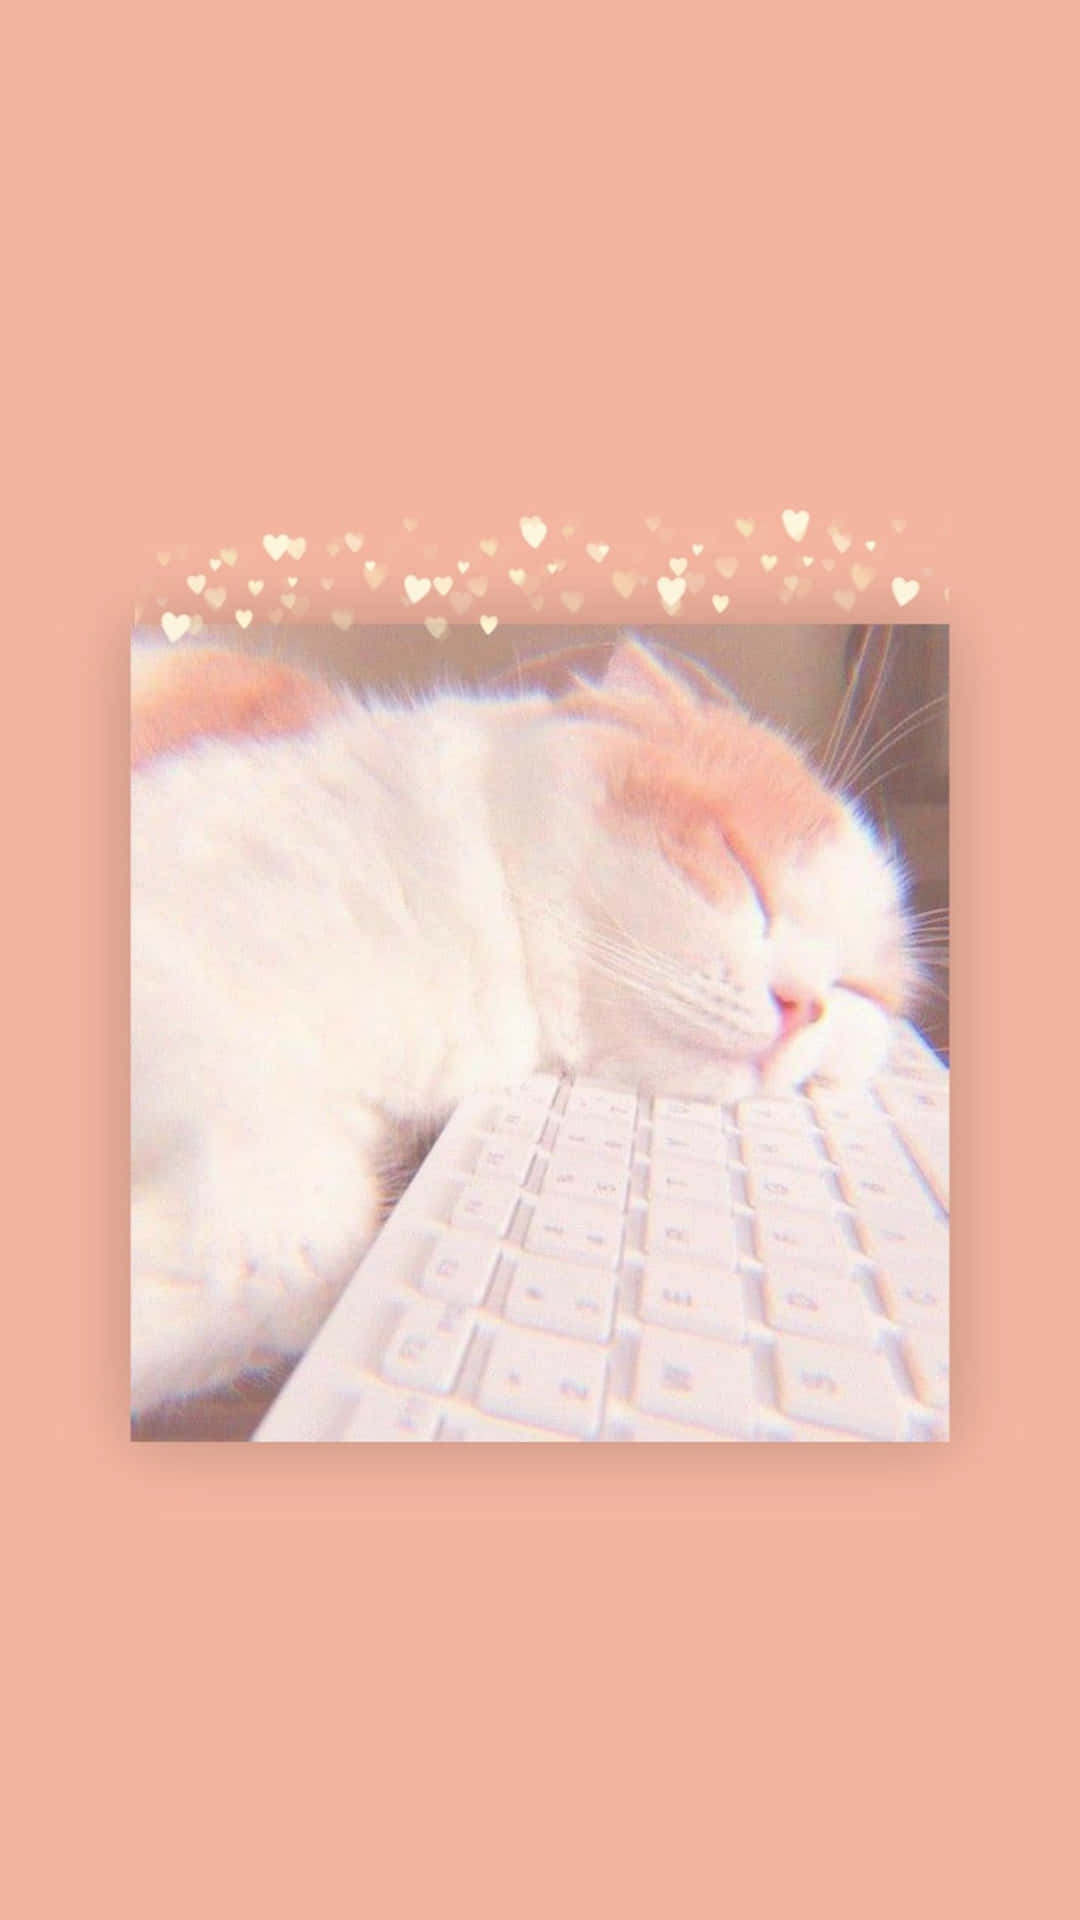 A Cat Is Sleeping On A Keyboard